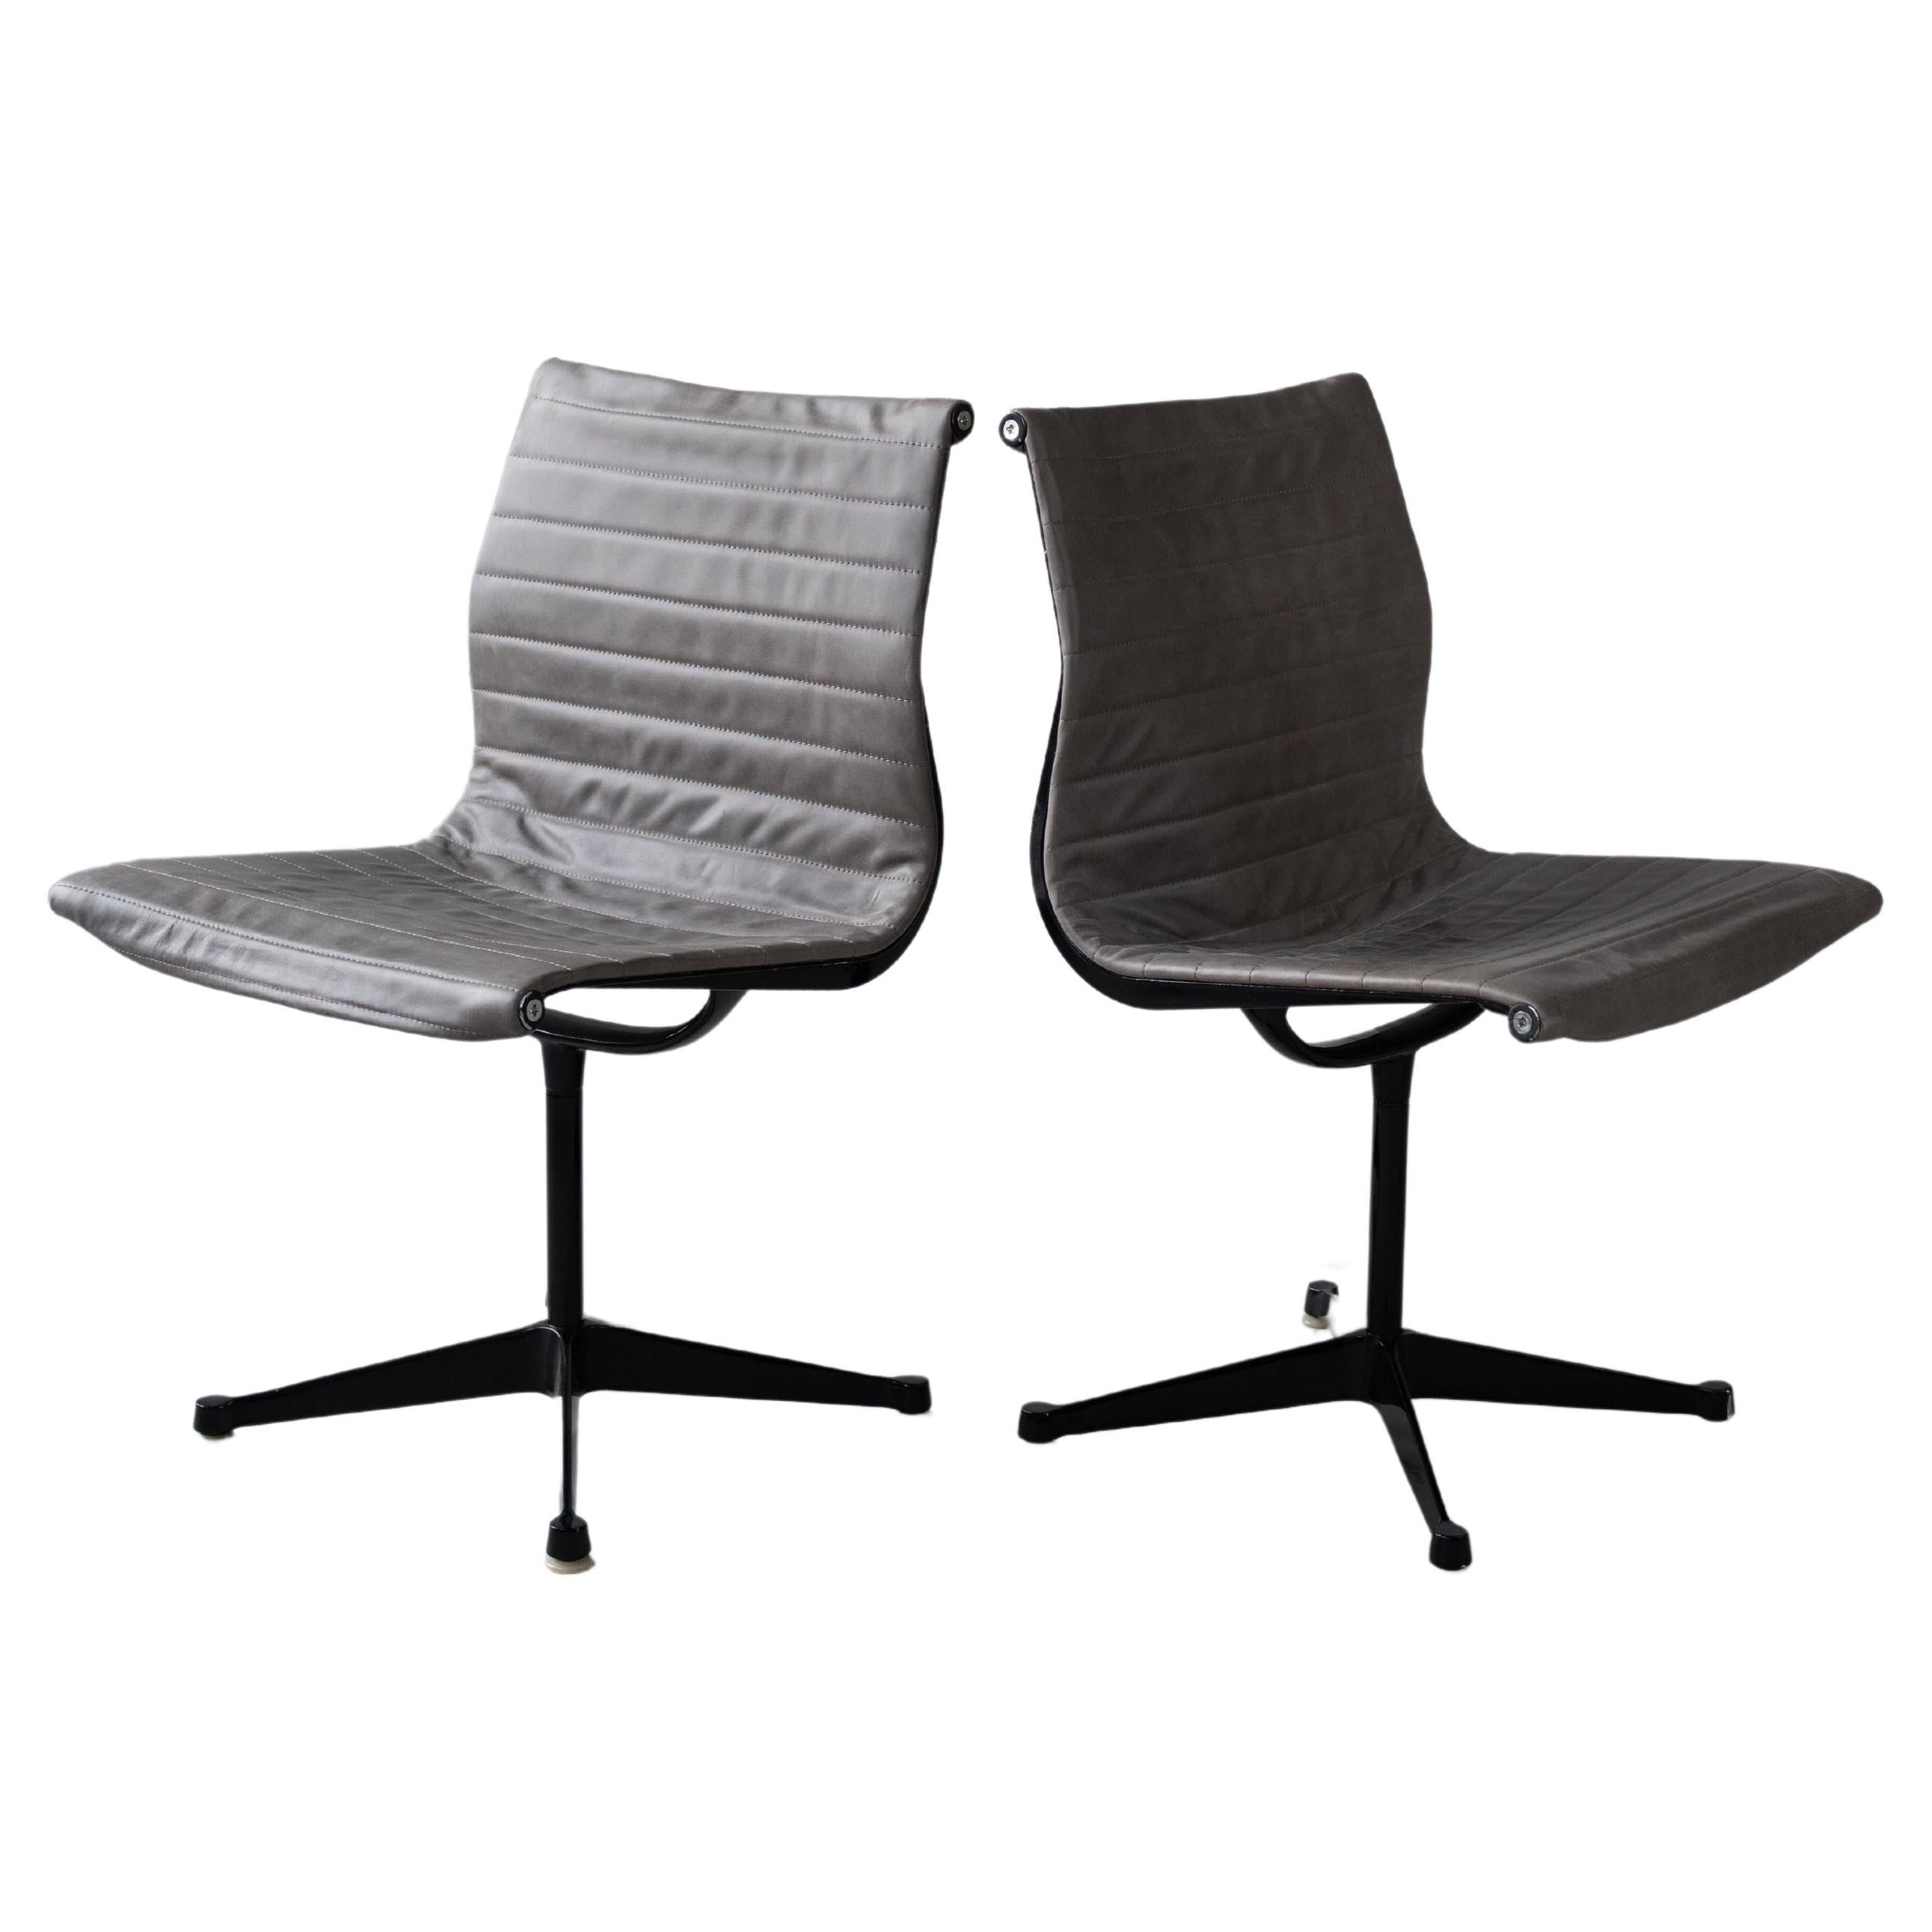 Chaise en aluminium de Charles and Ray Eames, ensemble de 2 chaises en vente